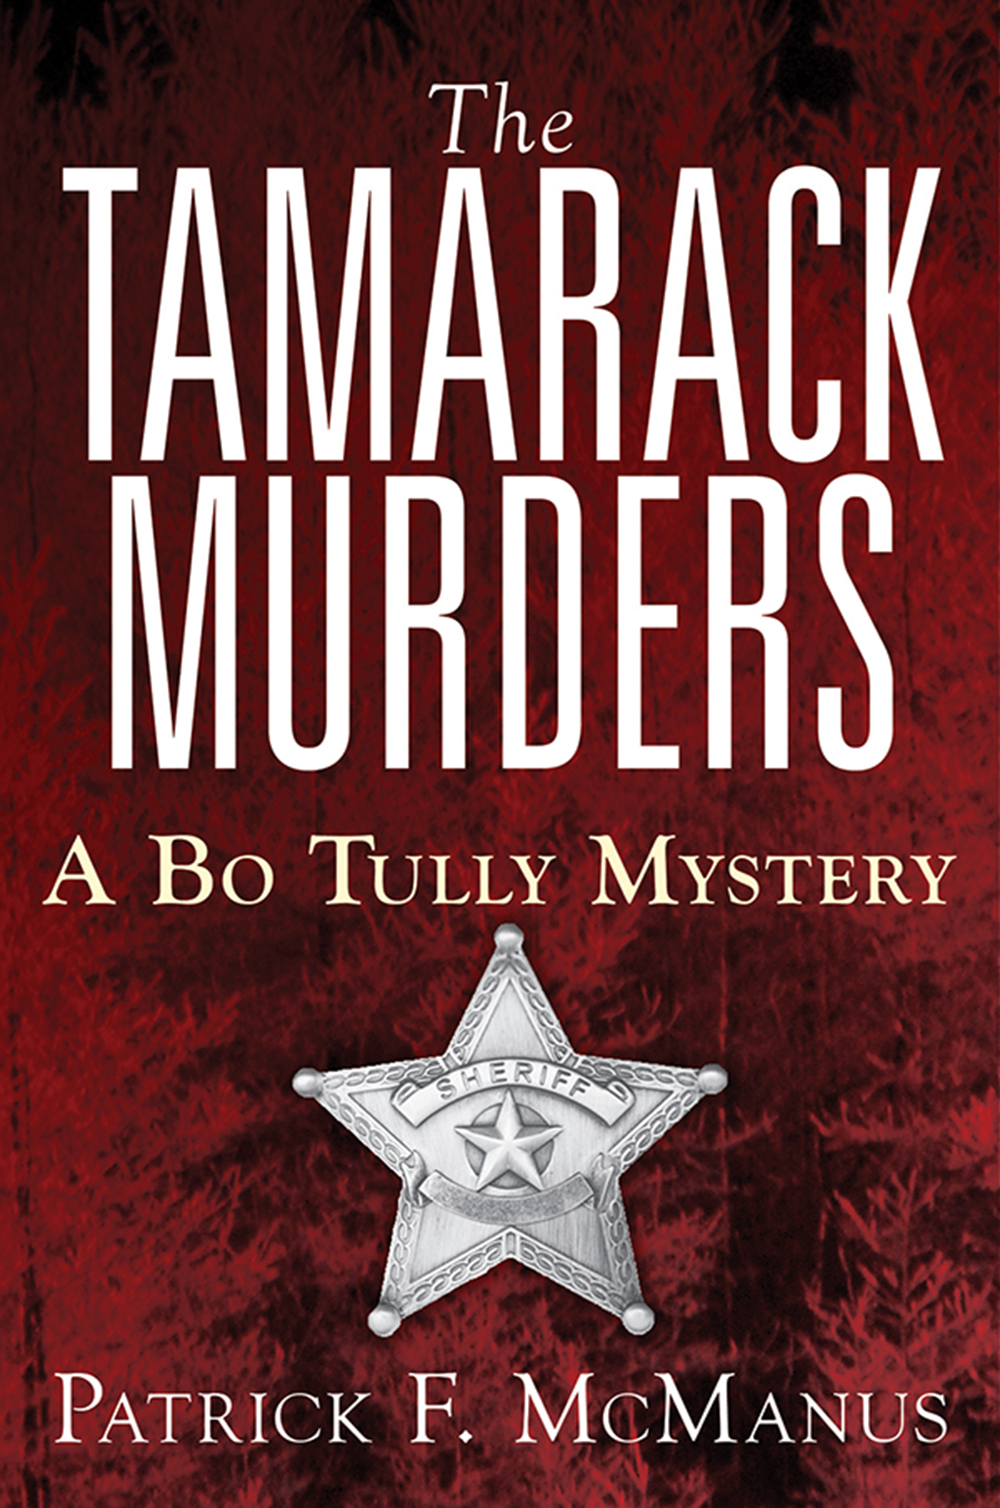 The Tamarack Murders by Patrick F. McManus